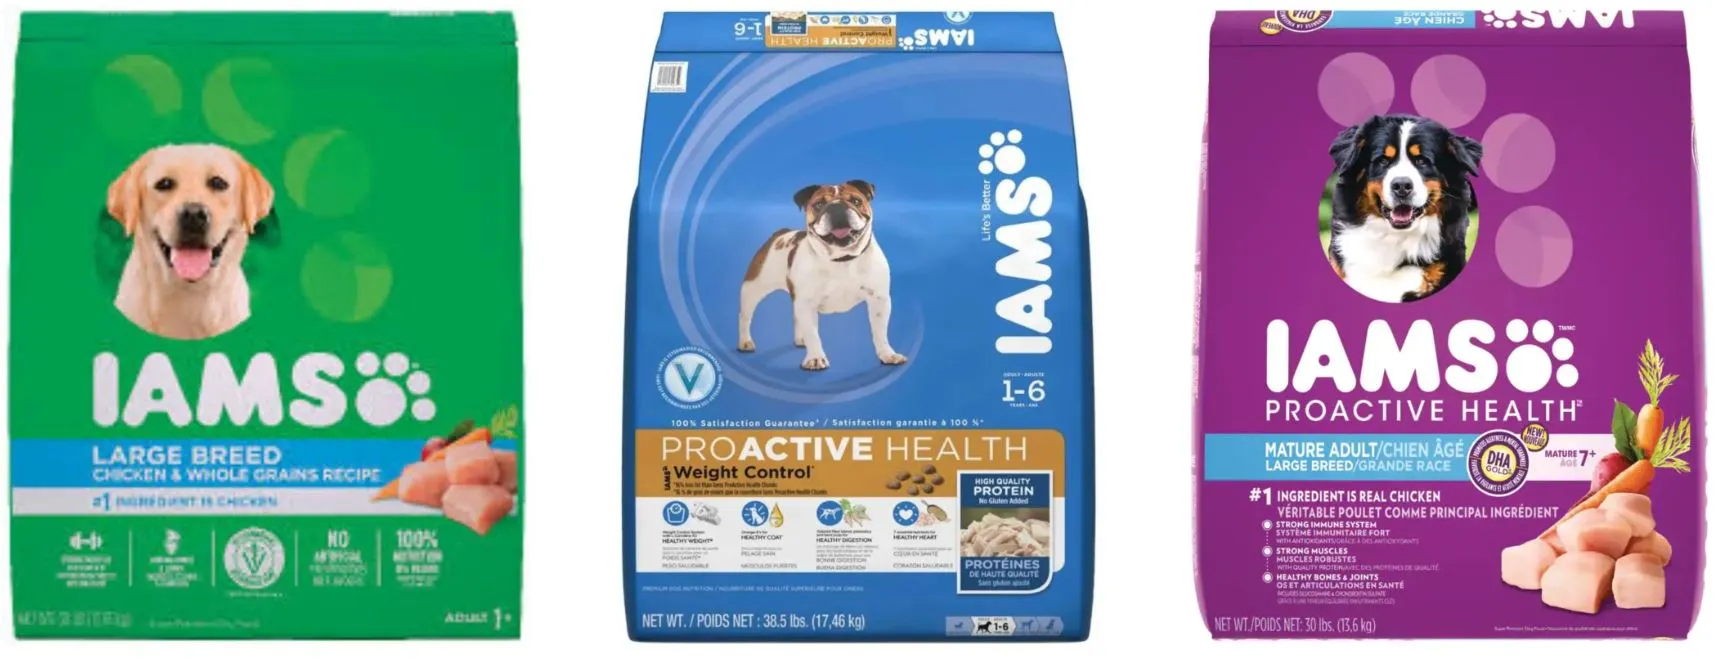 IAMS-Pet-Product